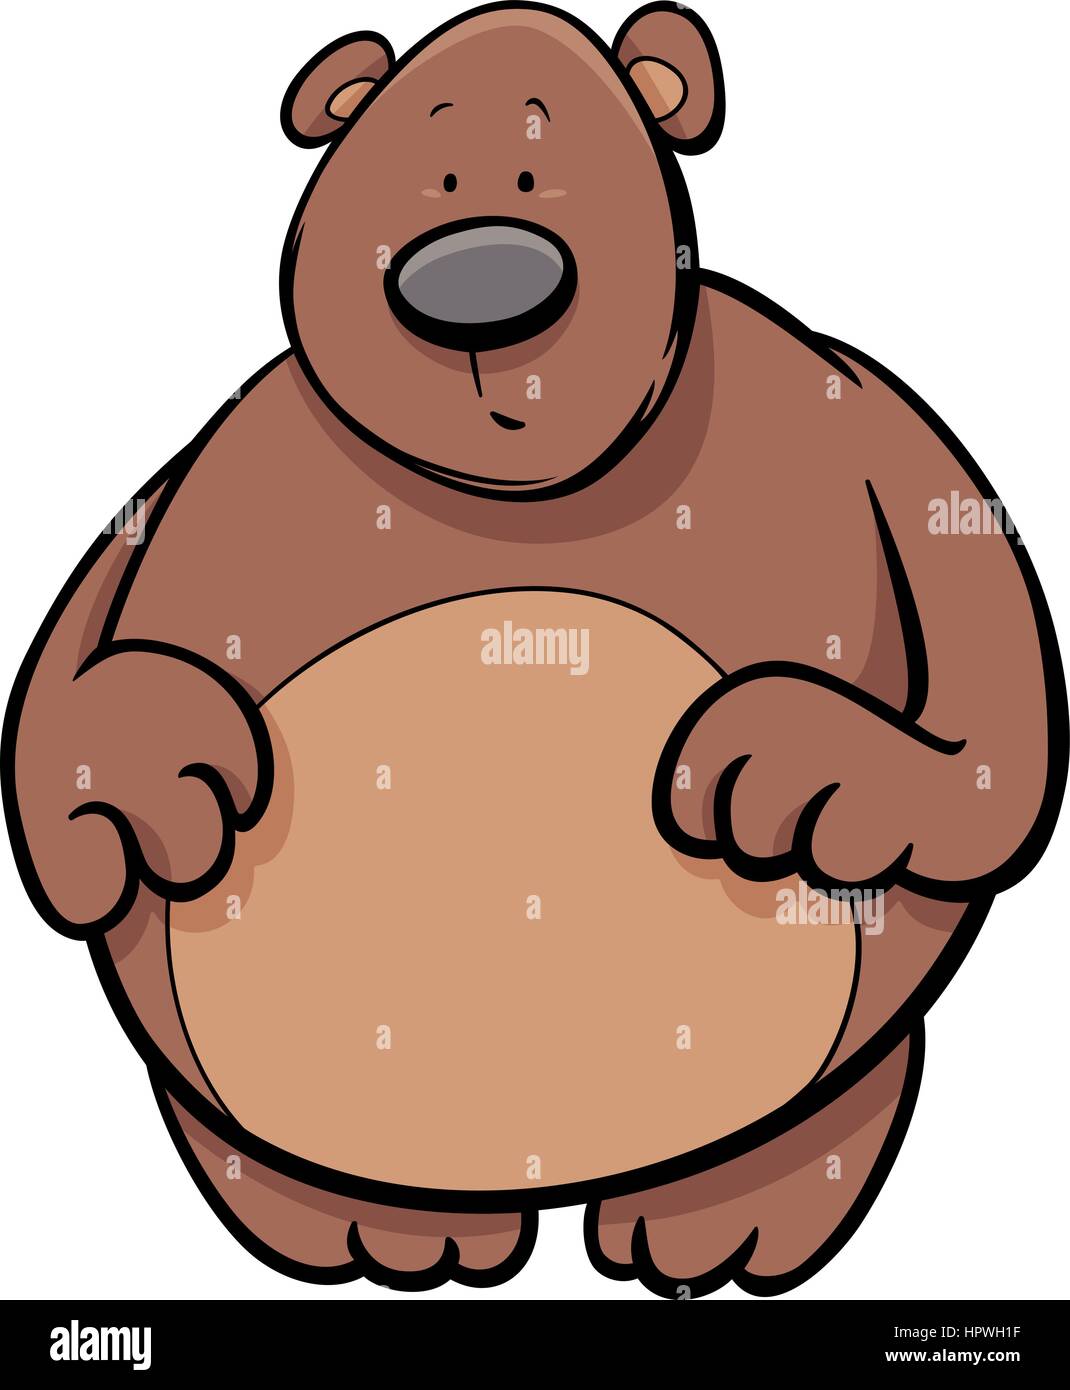 Cartoon Illustration of Funny Bear Animal Character Stock Vector